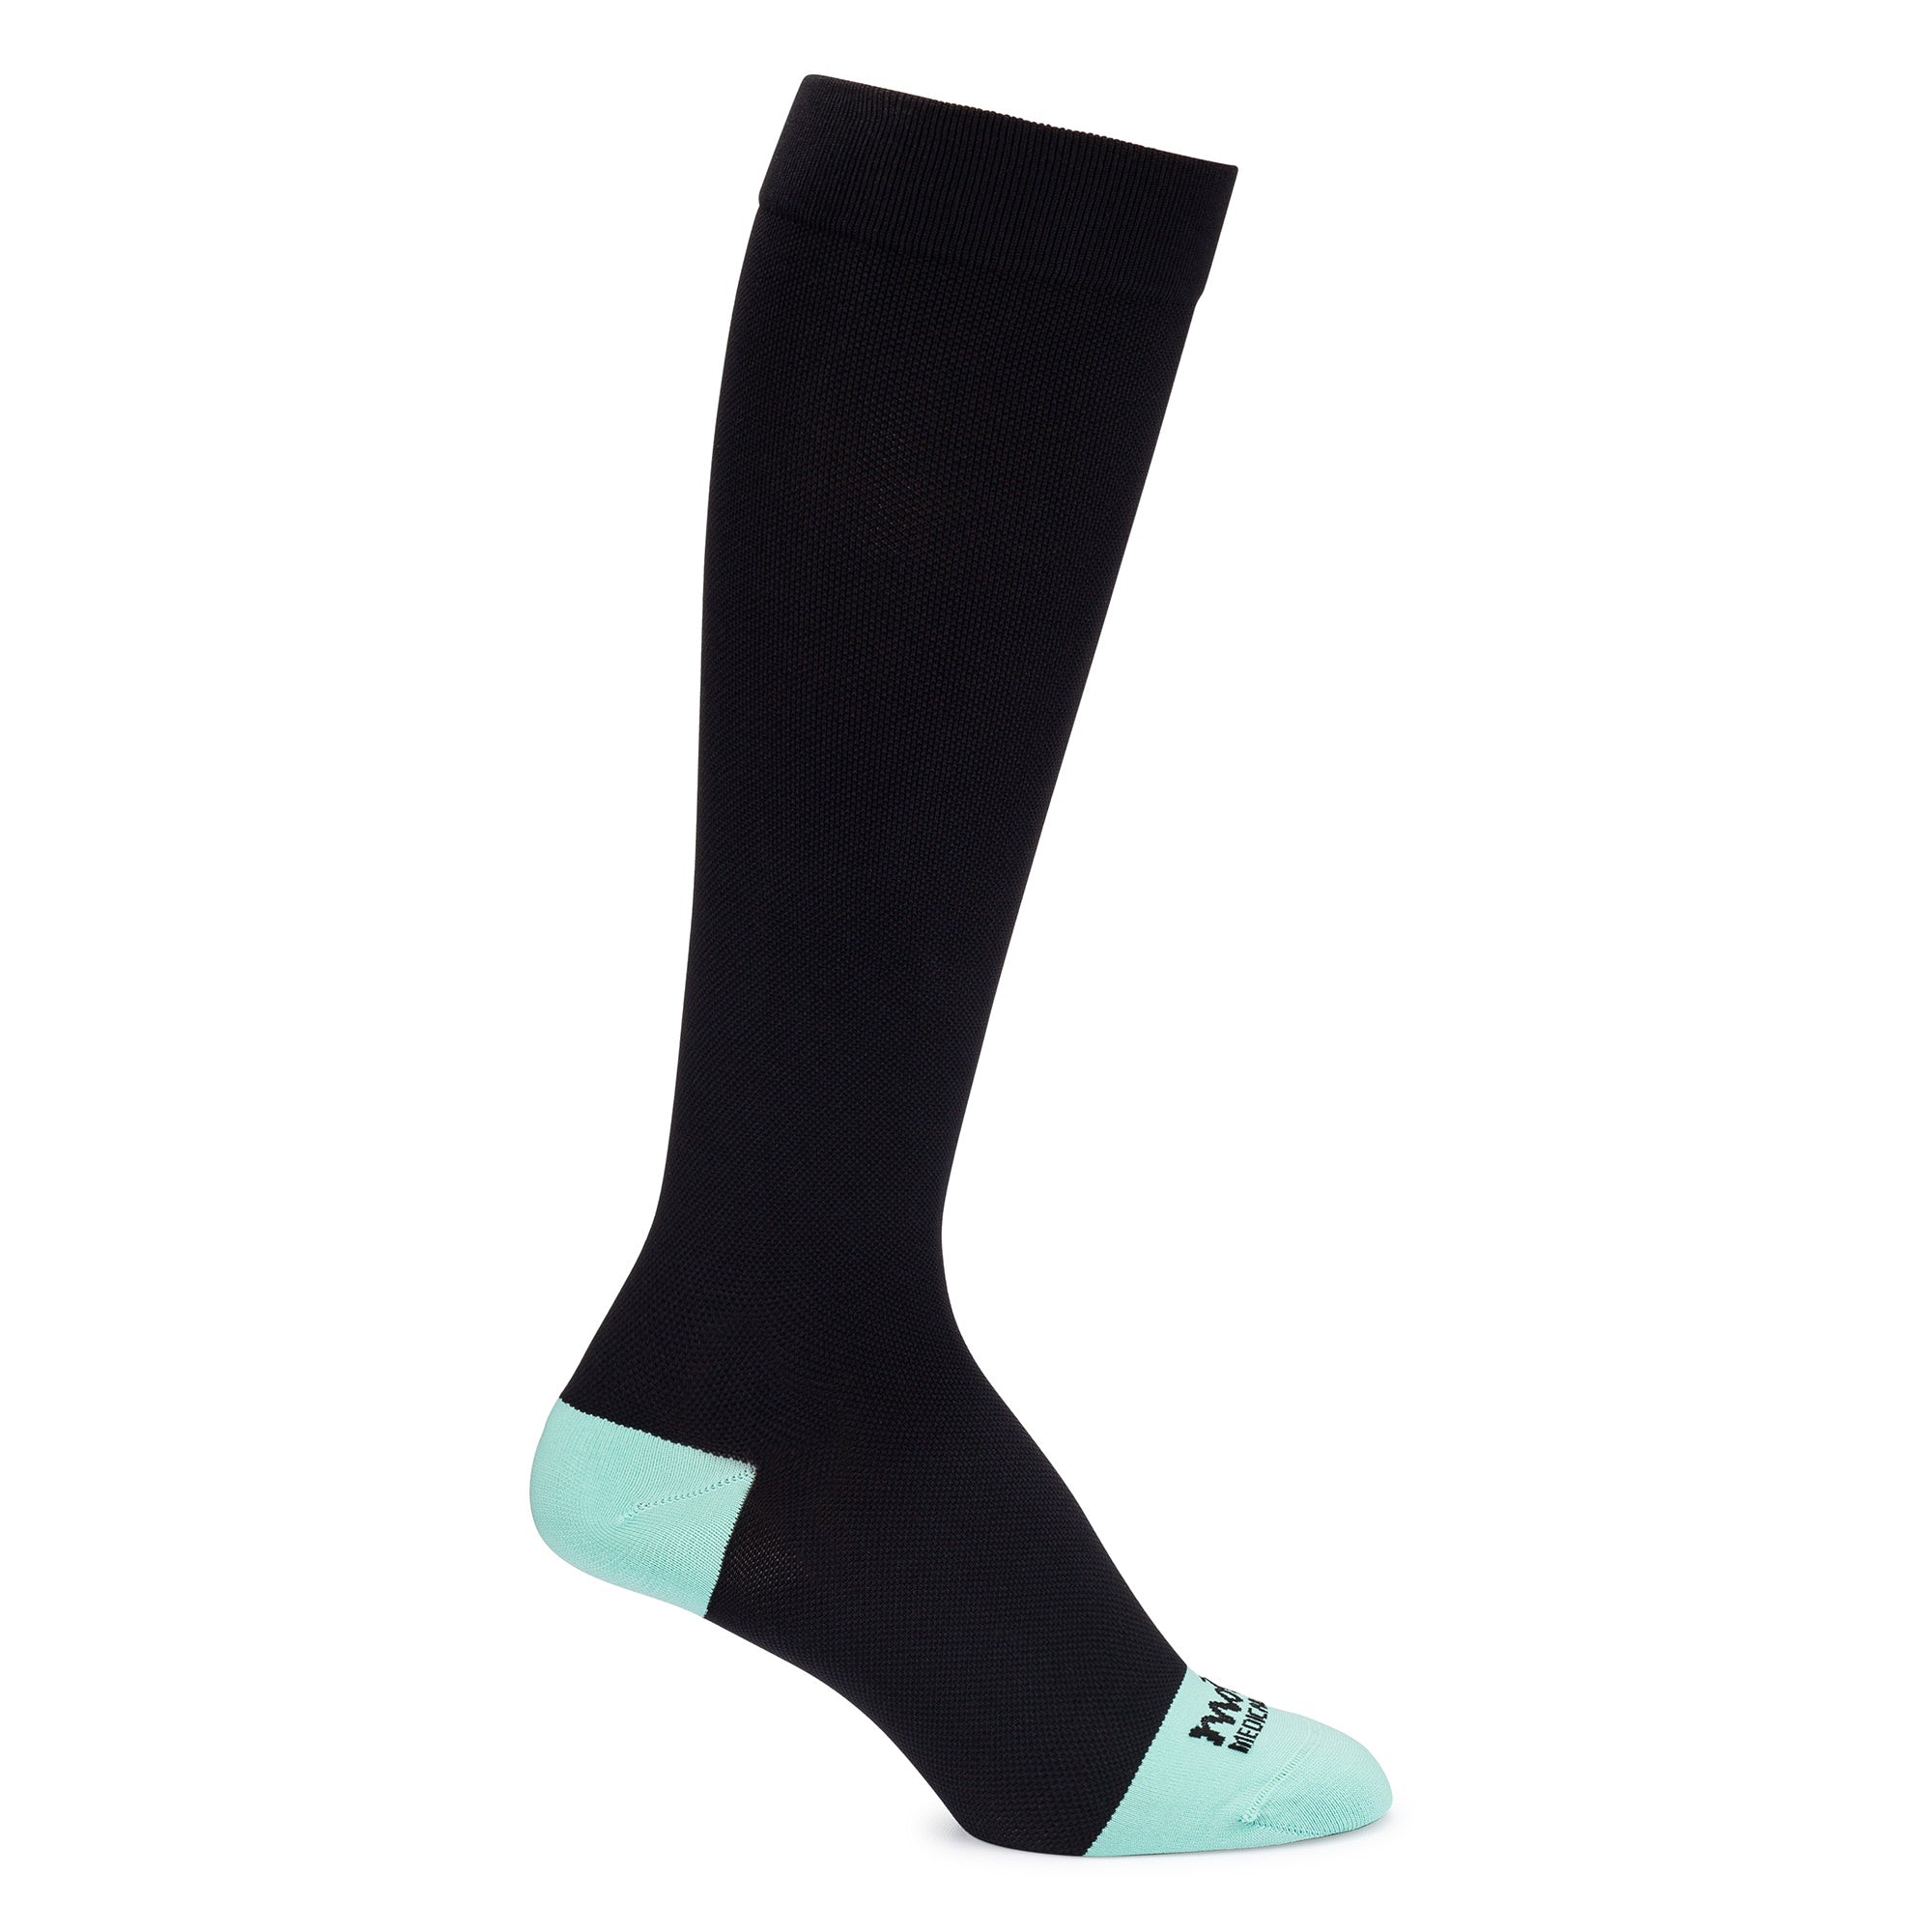 Black tall sock with mint green toe and heel caps-Motif Medical Gradient Maternity Compression Socks